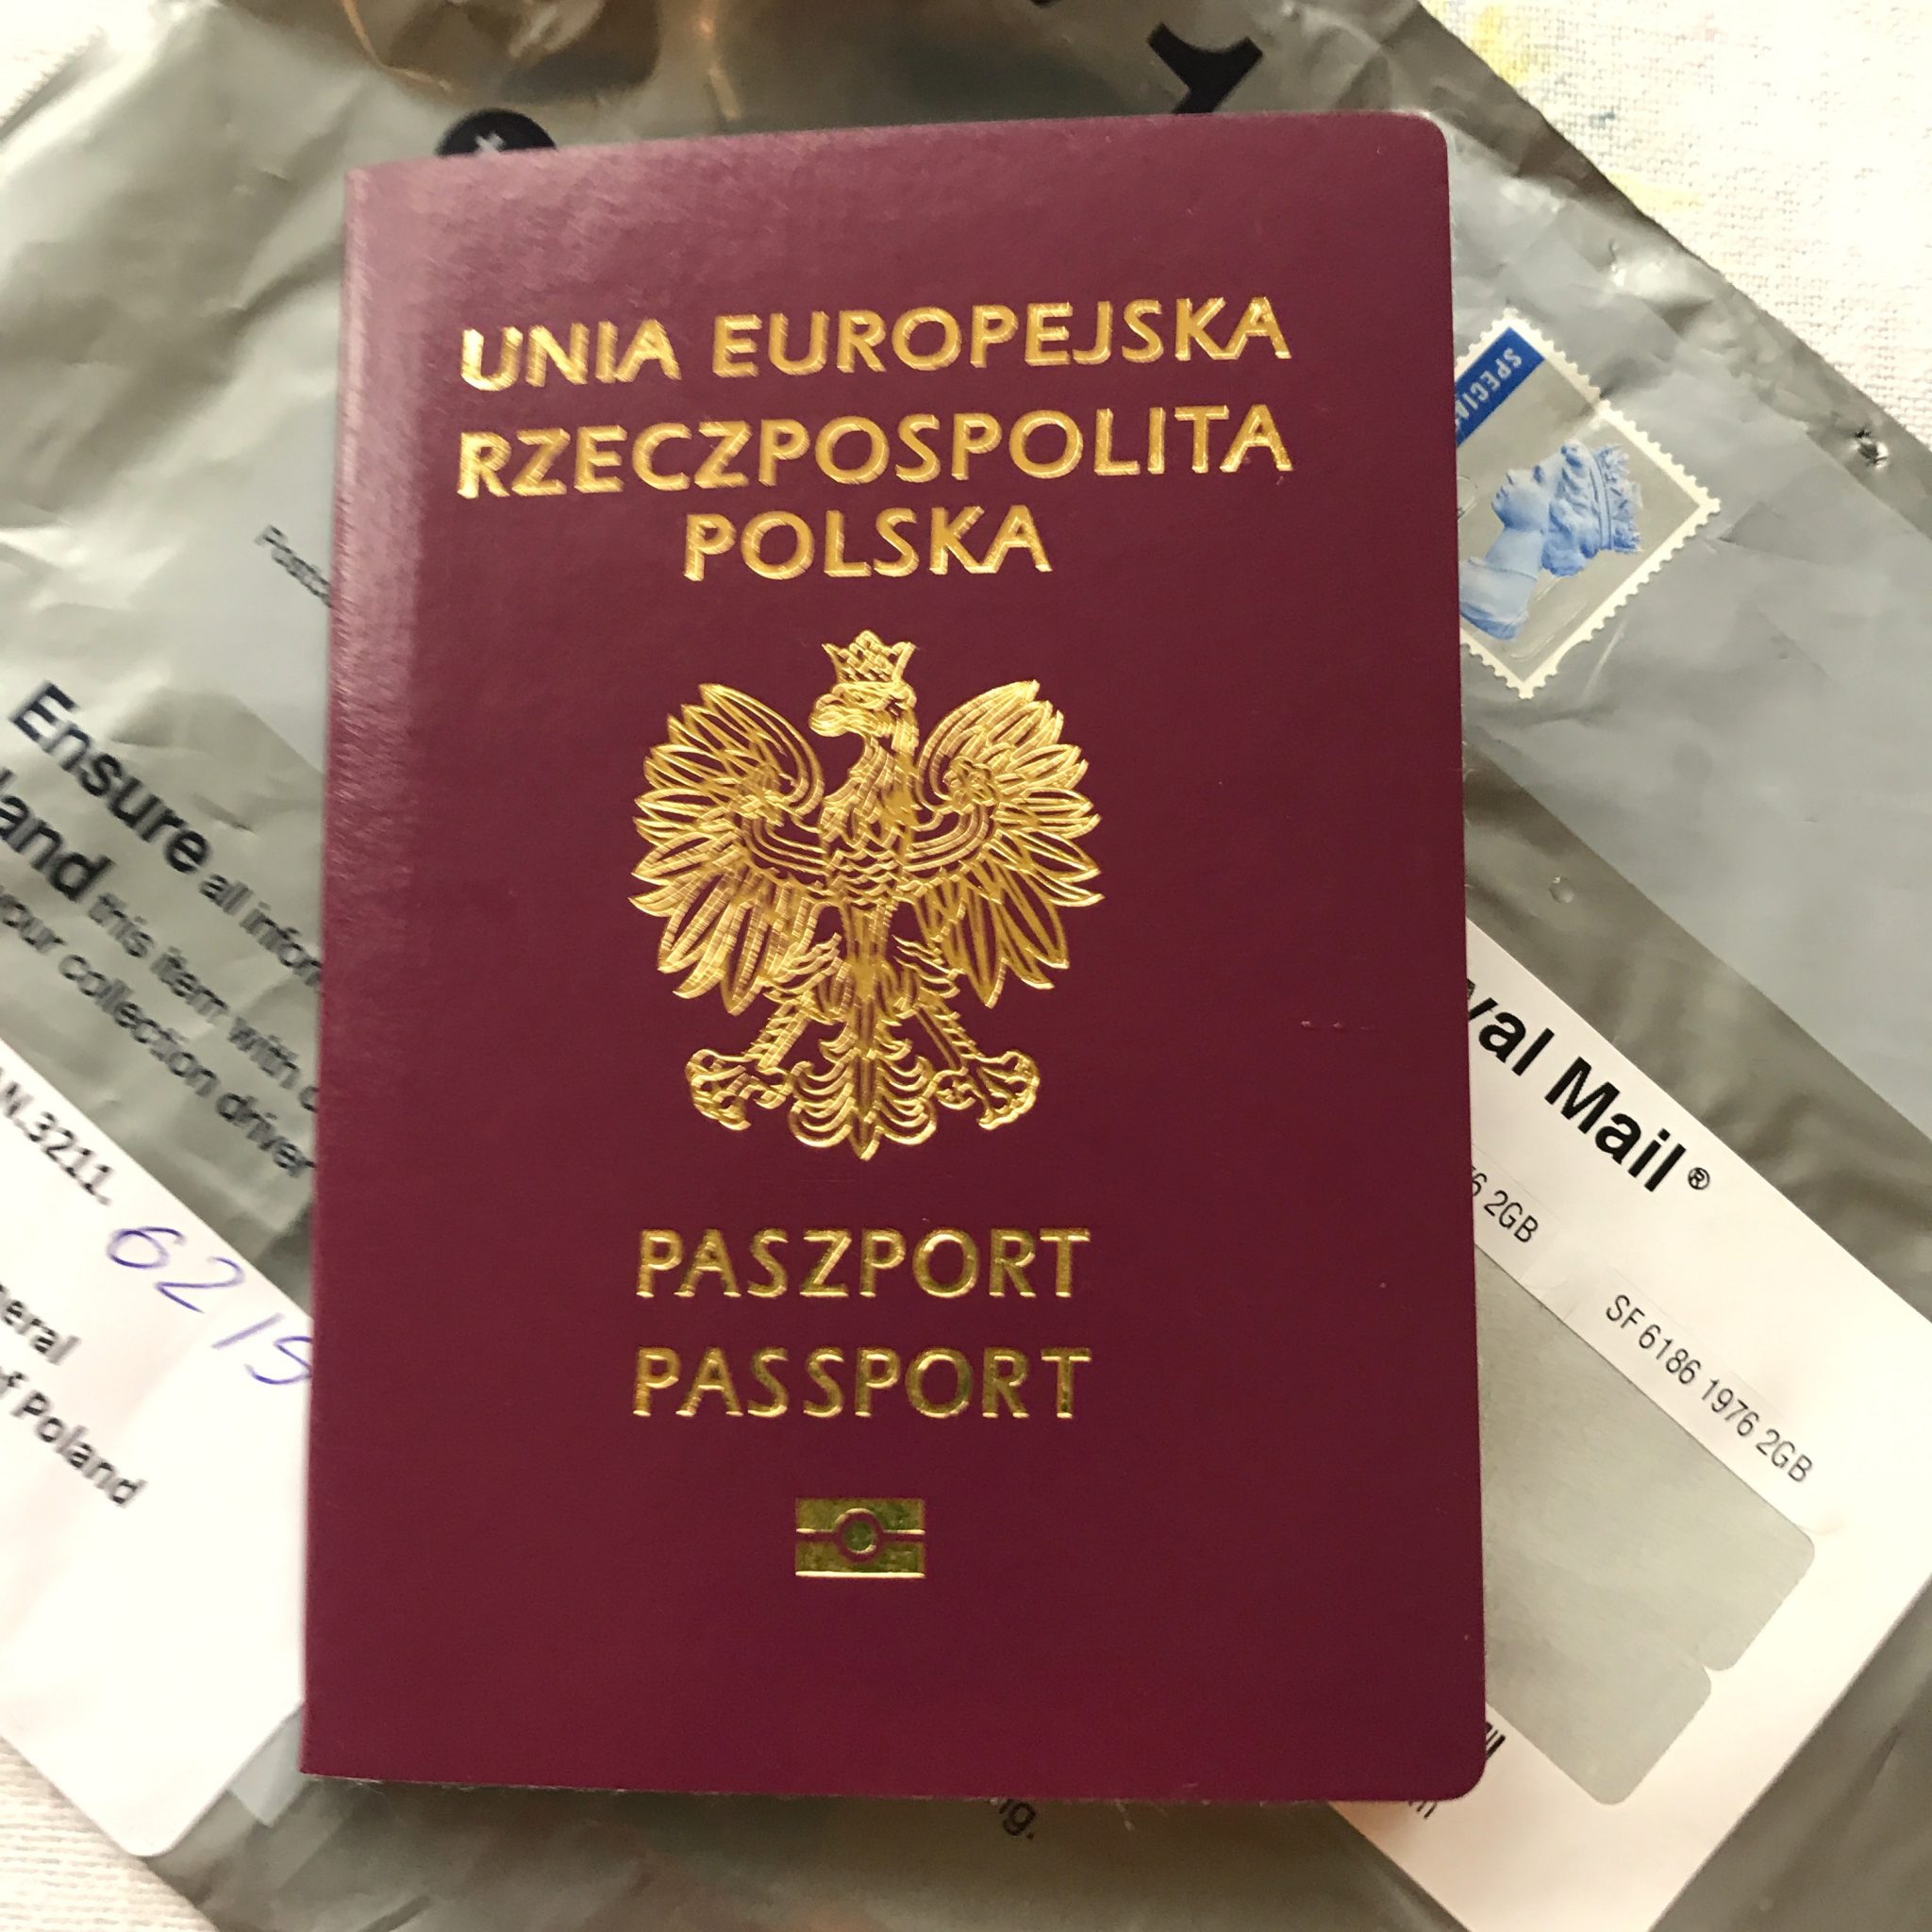 Reader, I got the passport! Polish at heart